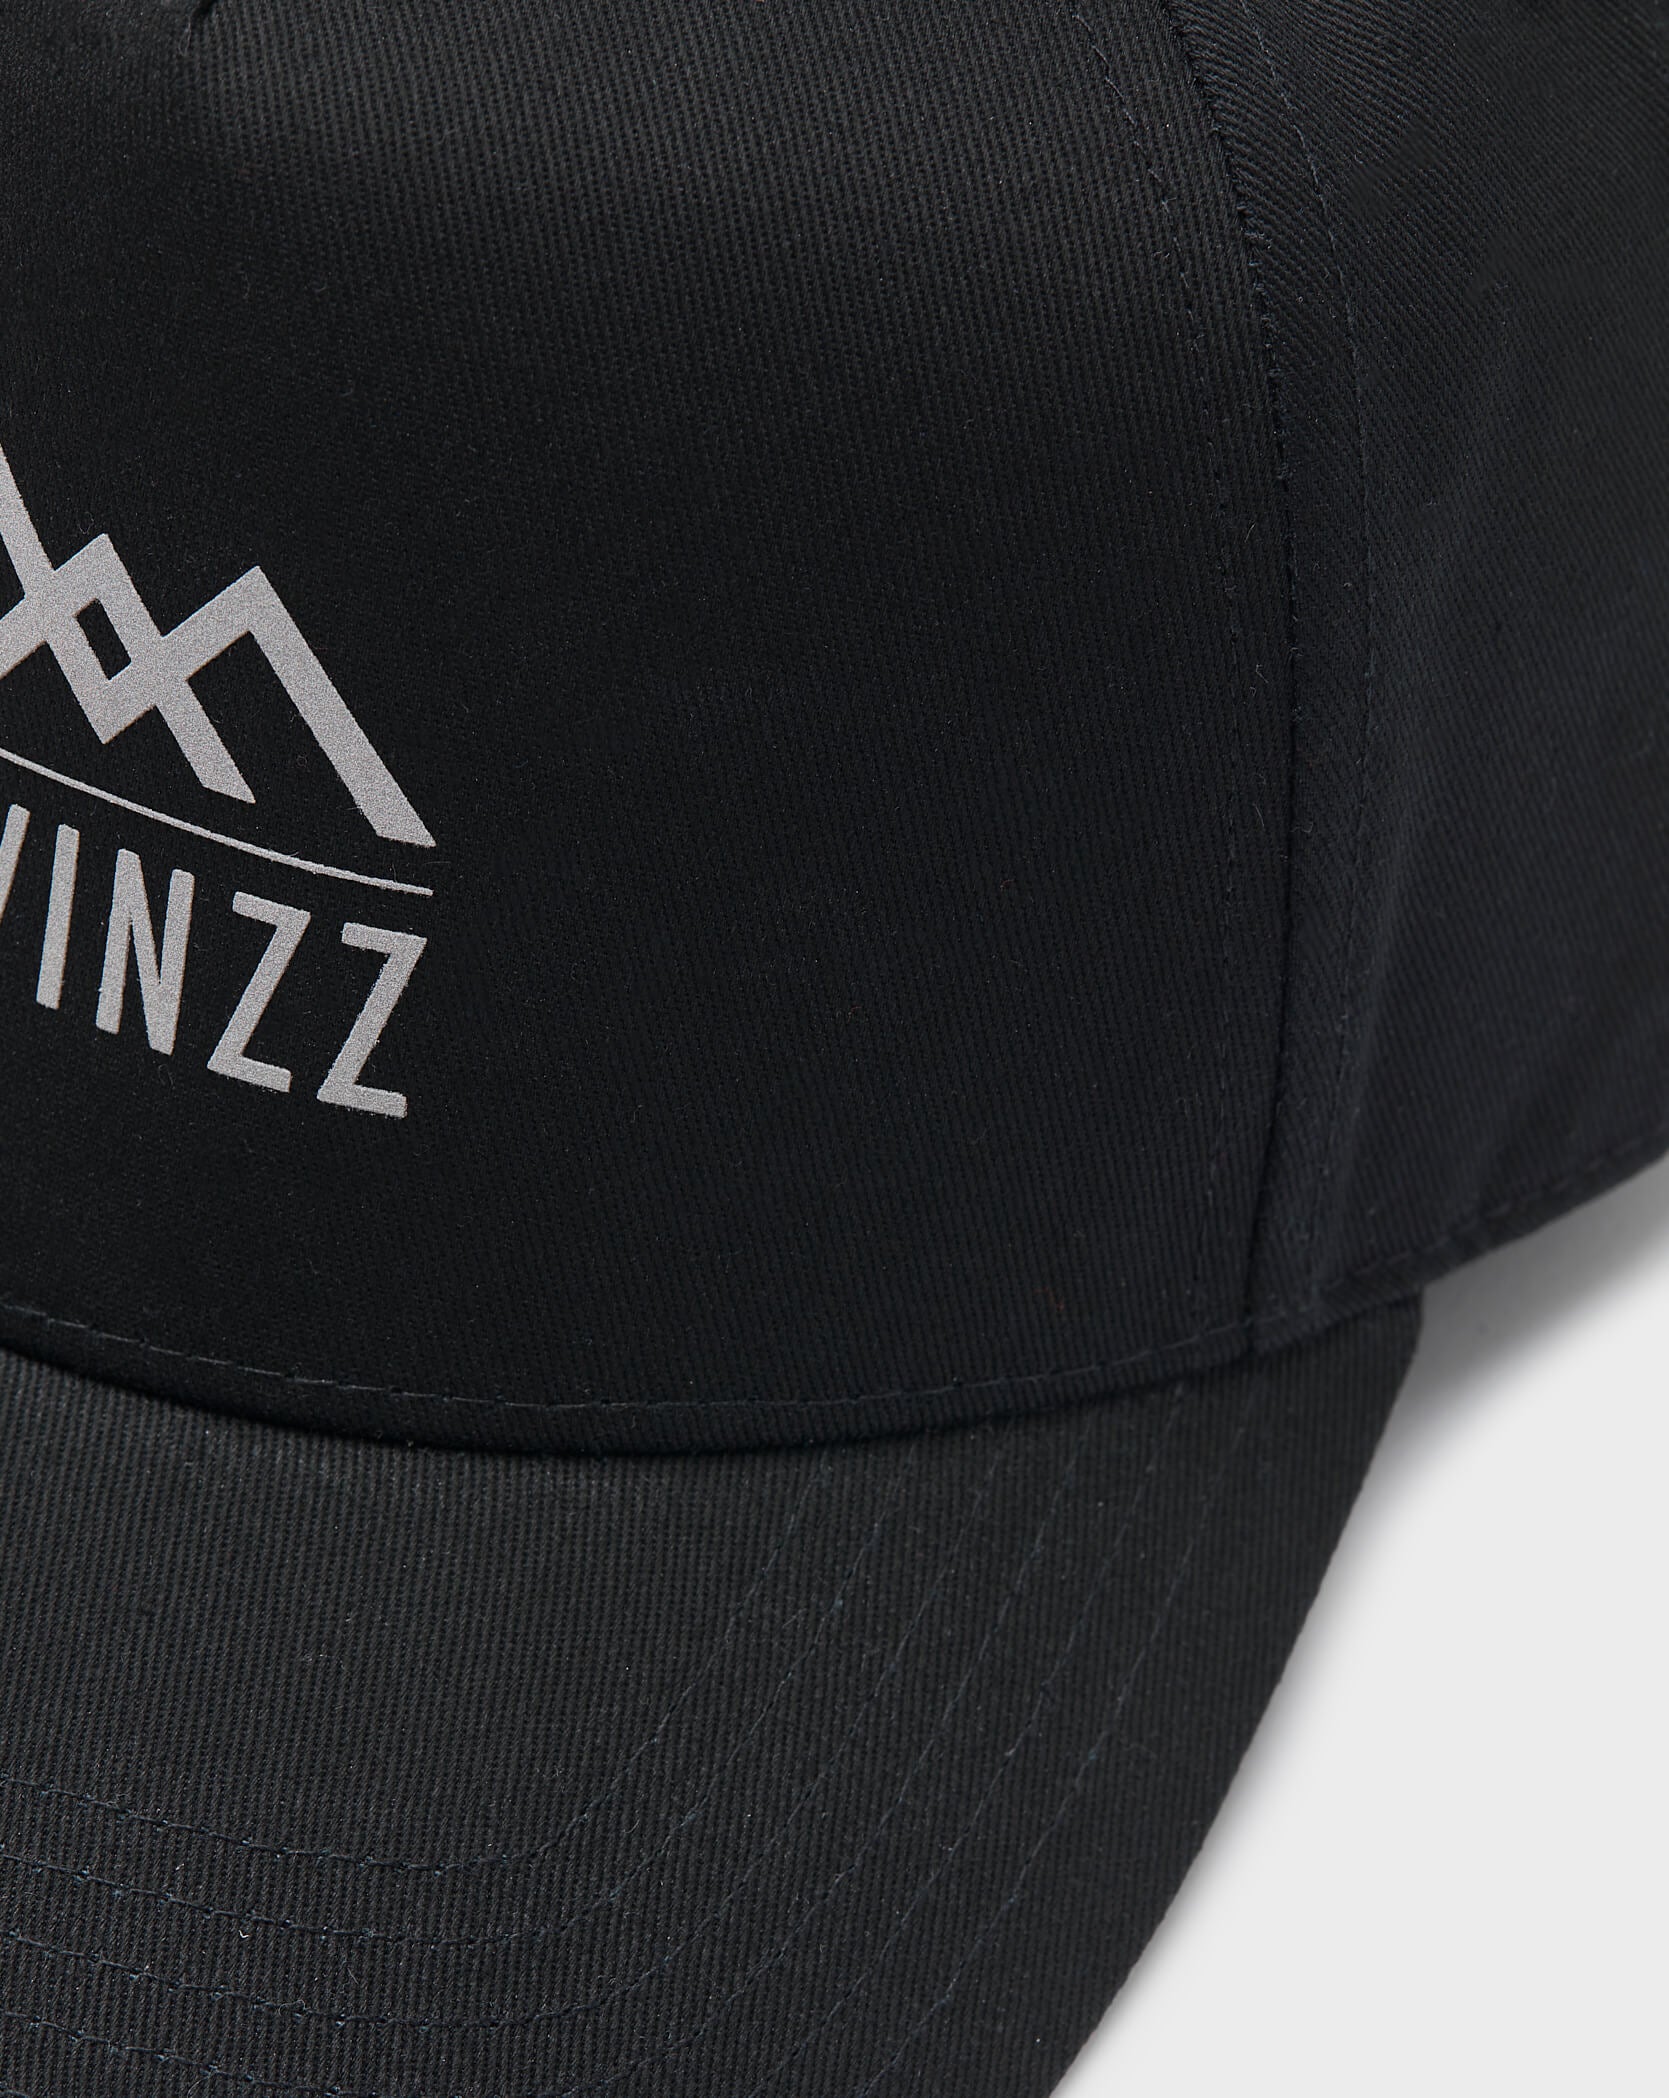 Twinzz black trucker hat with silver logo